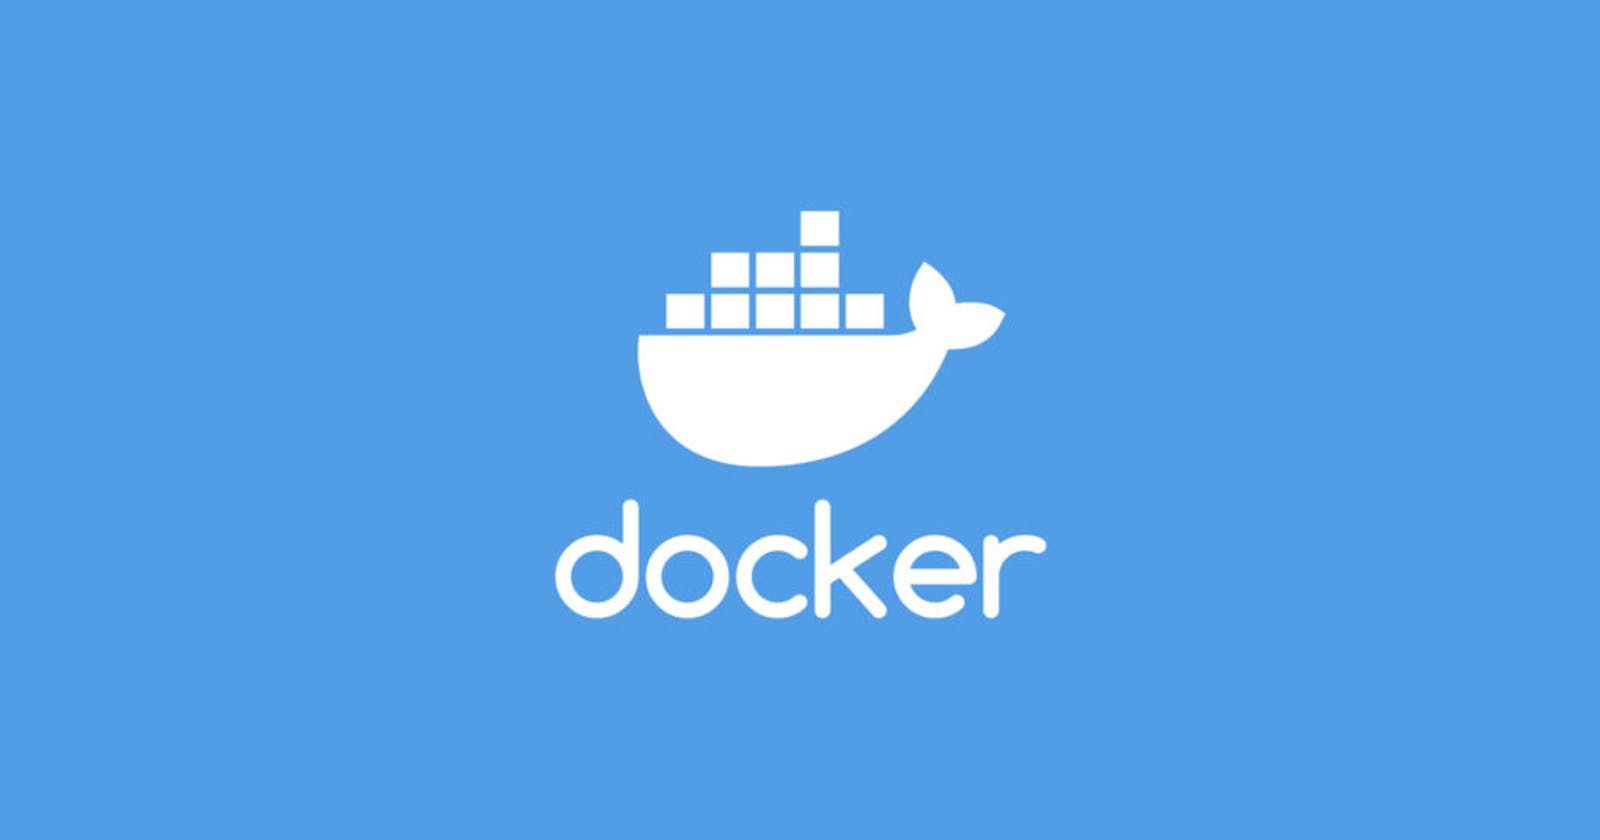 Basic Docker Container